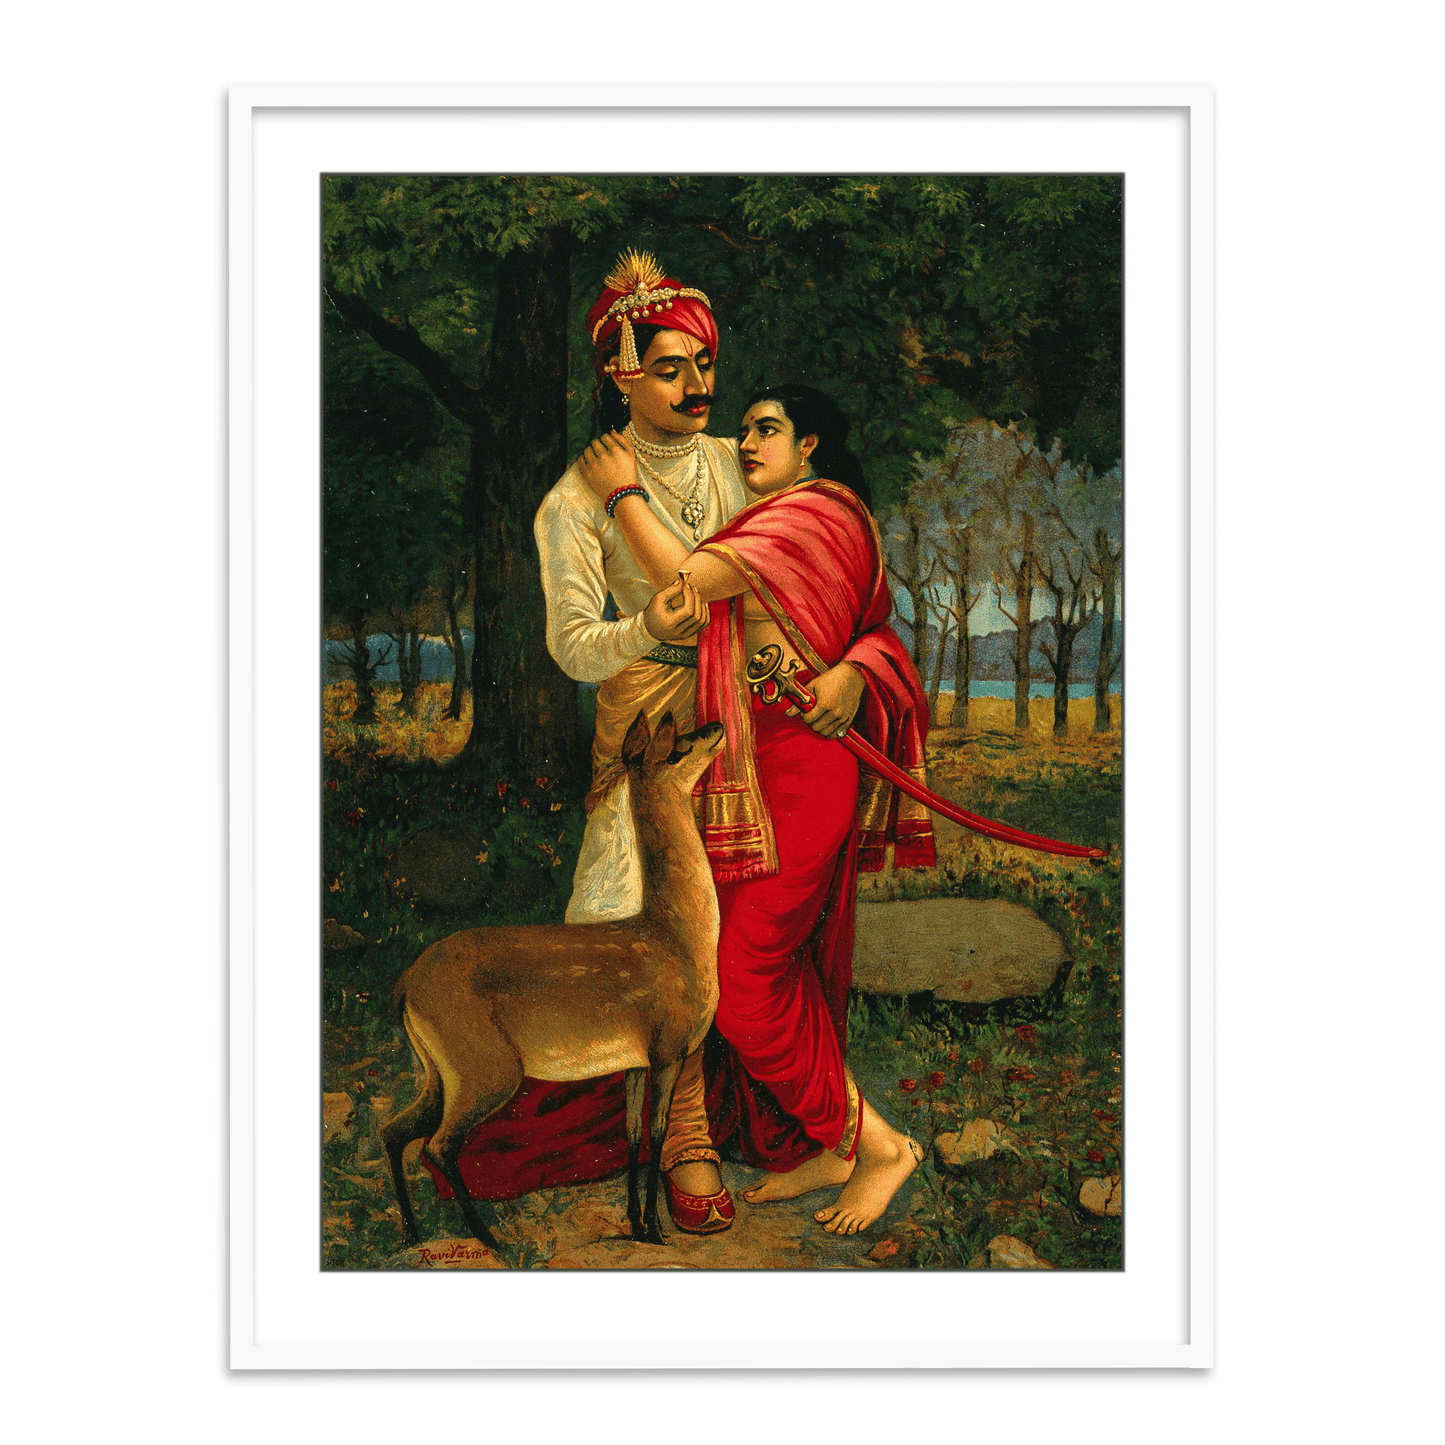 King Dushyanta proposing marriage with a ring to Shakuntala by Raja Ravi Varma Wall Art